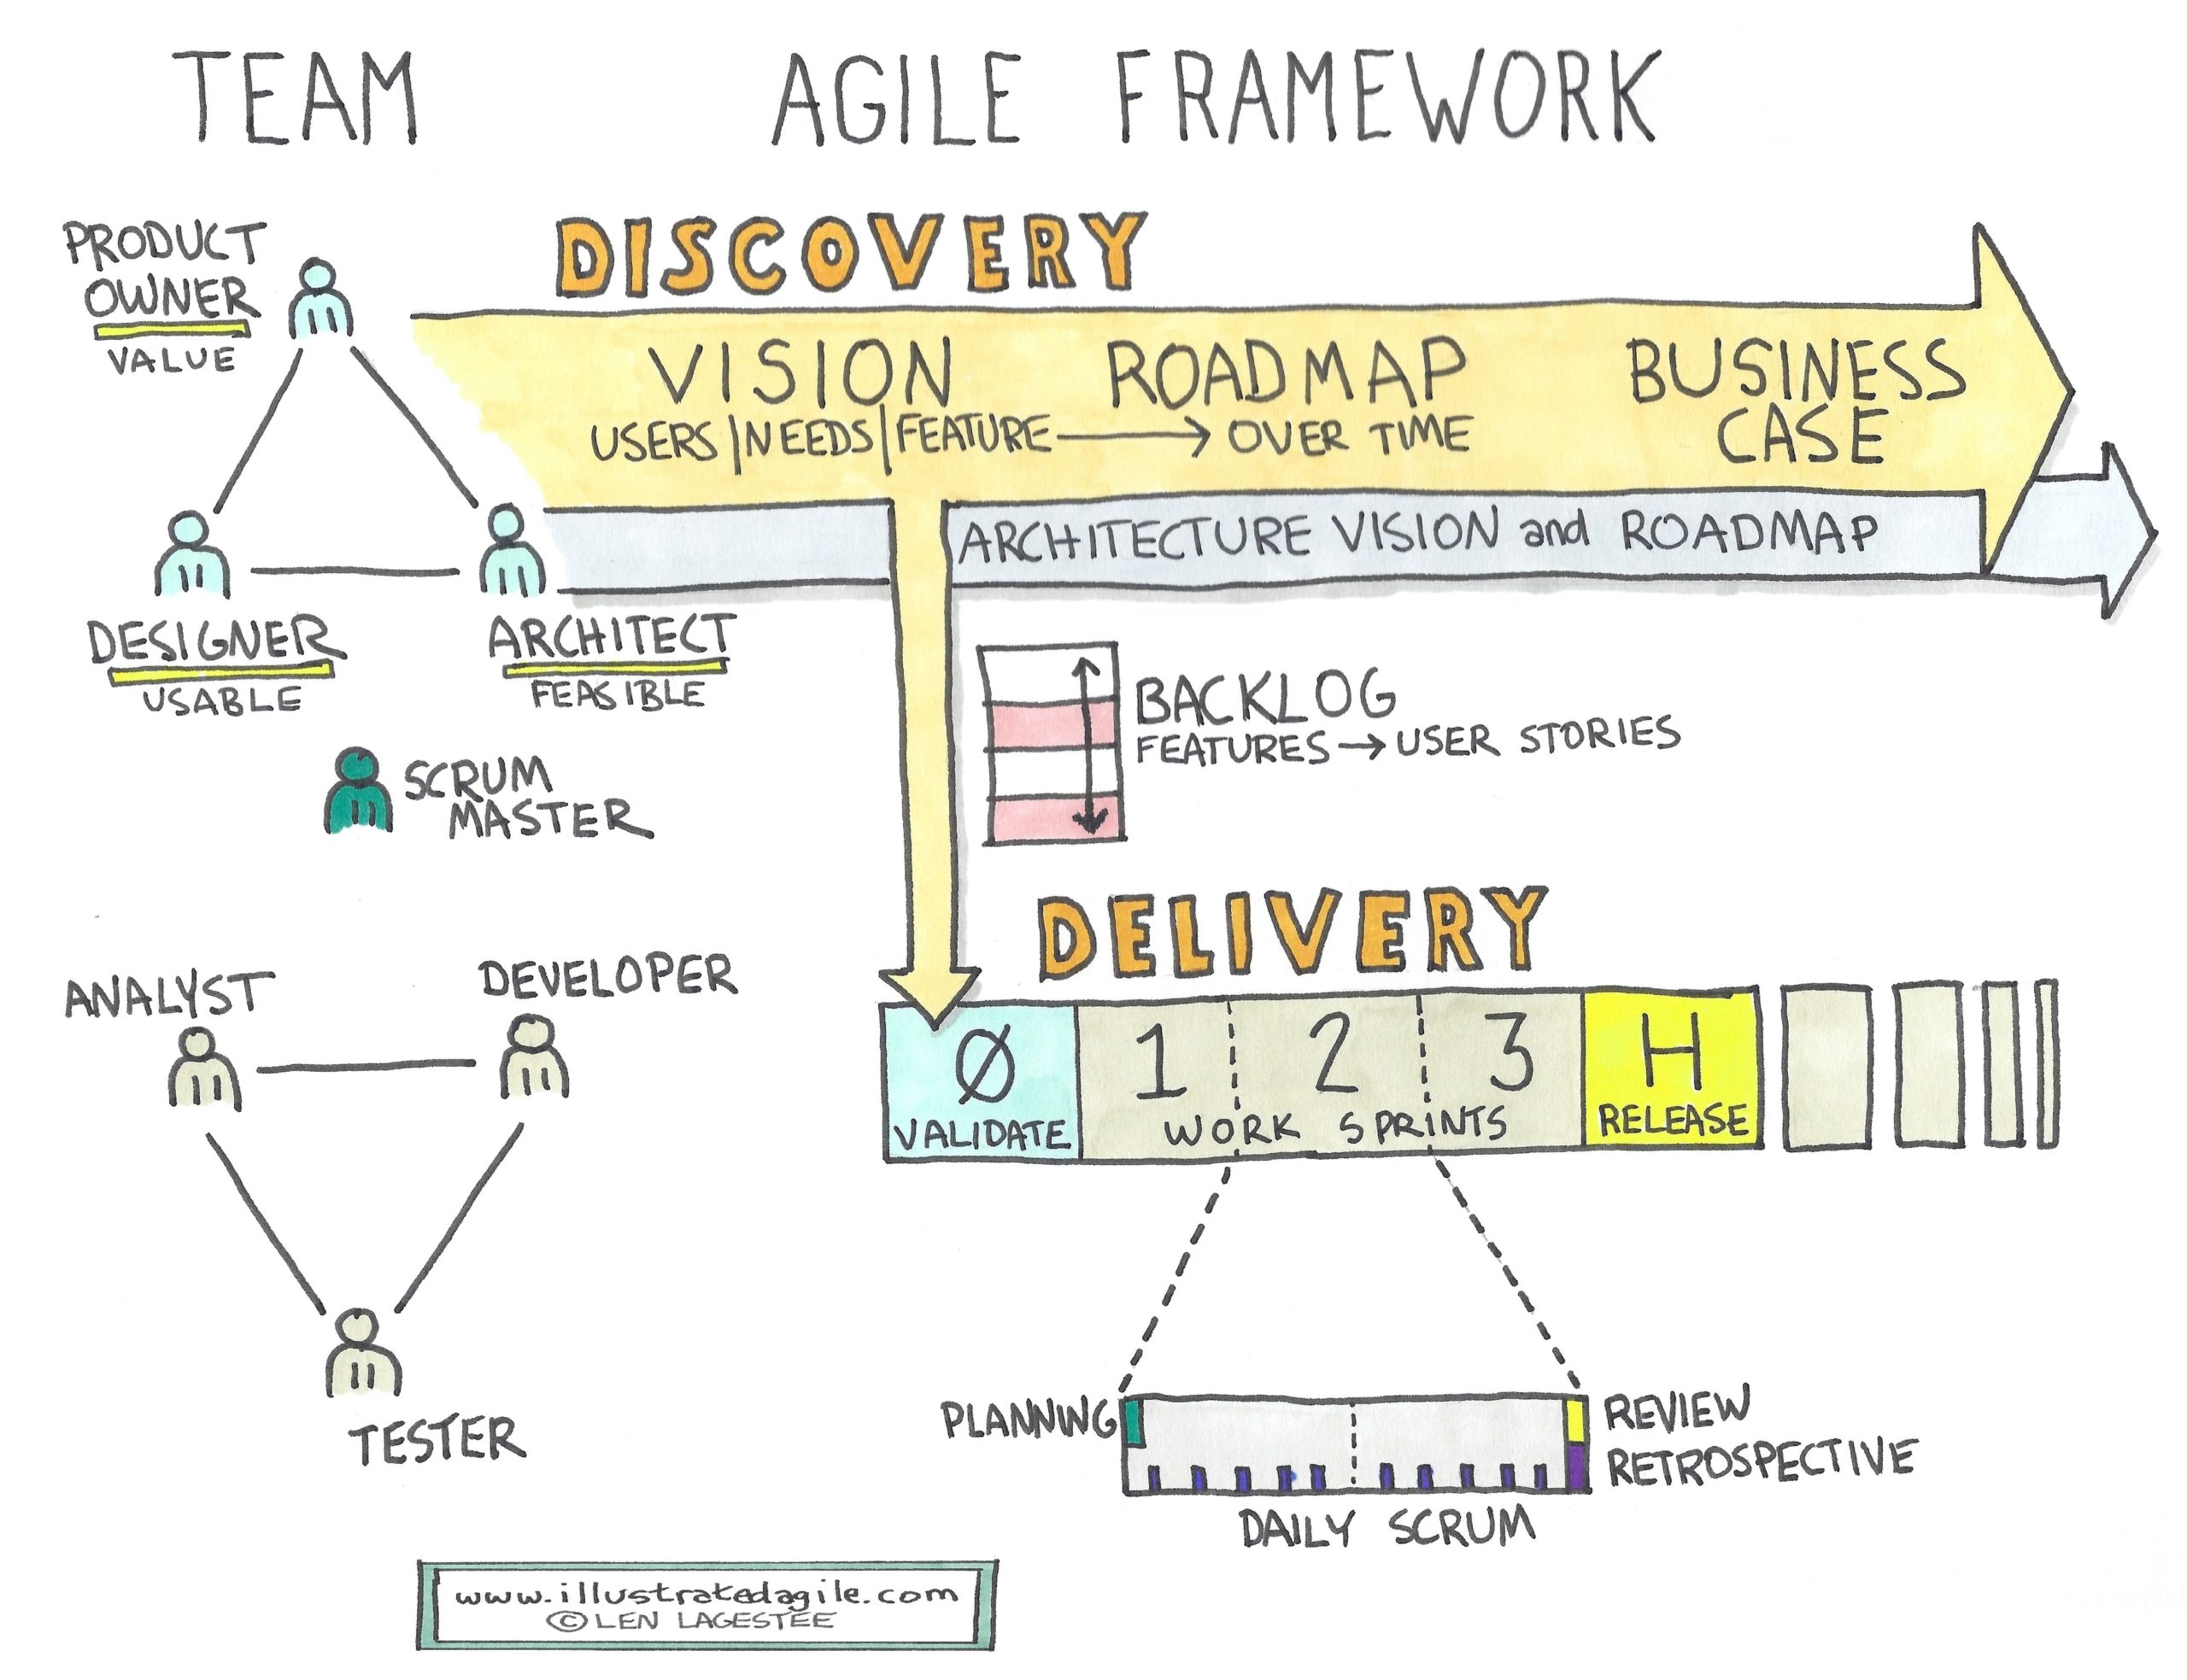 Agile framework illustrated